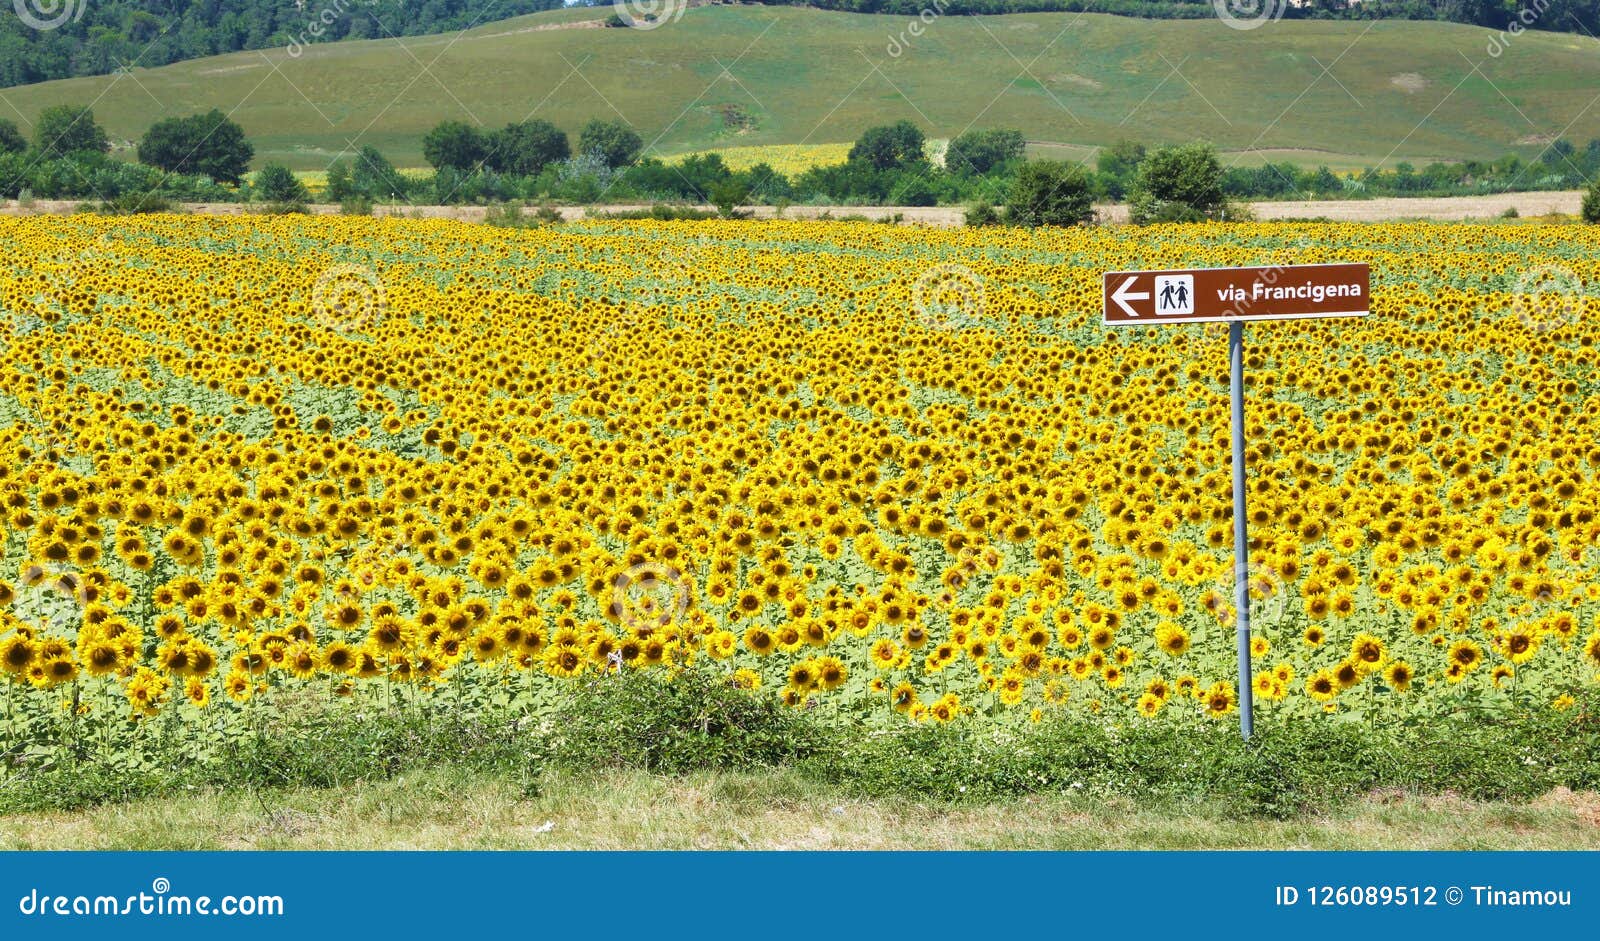 via francigena signpost and sunflower field, tuscany